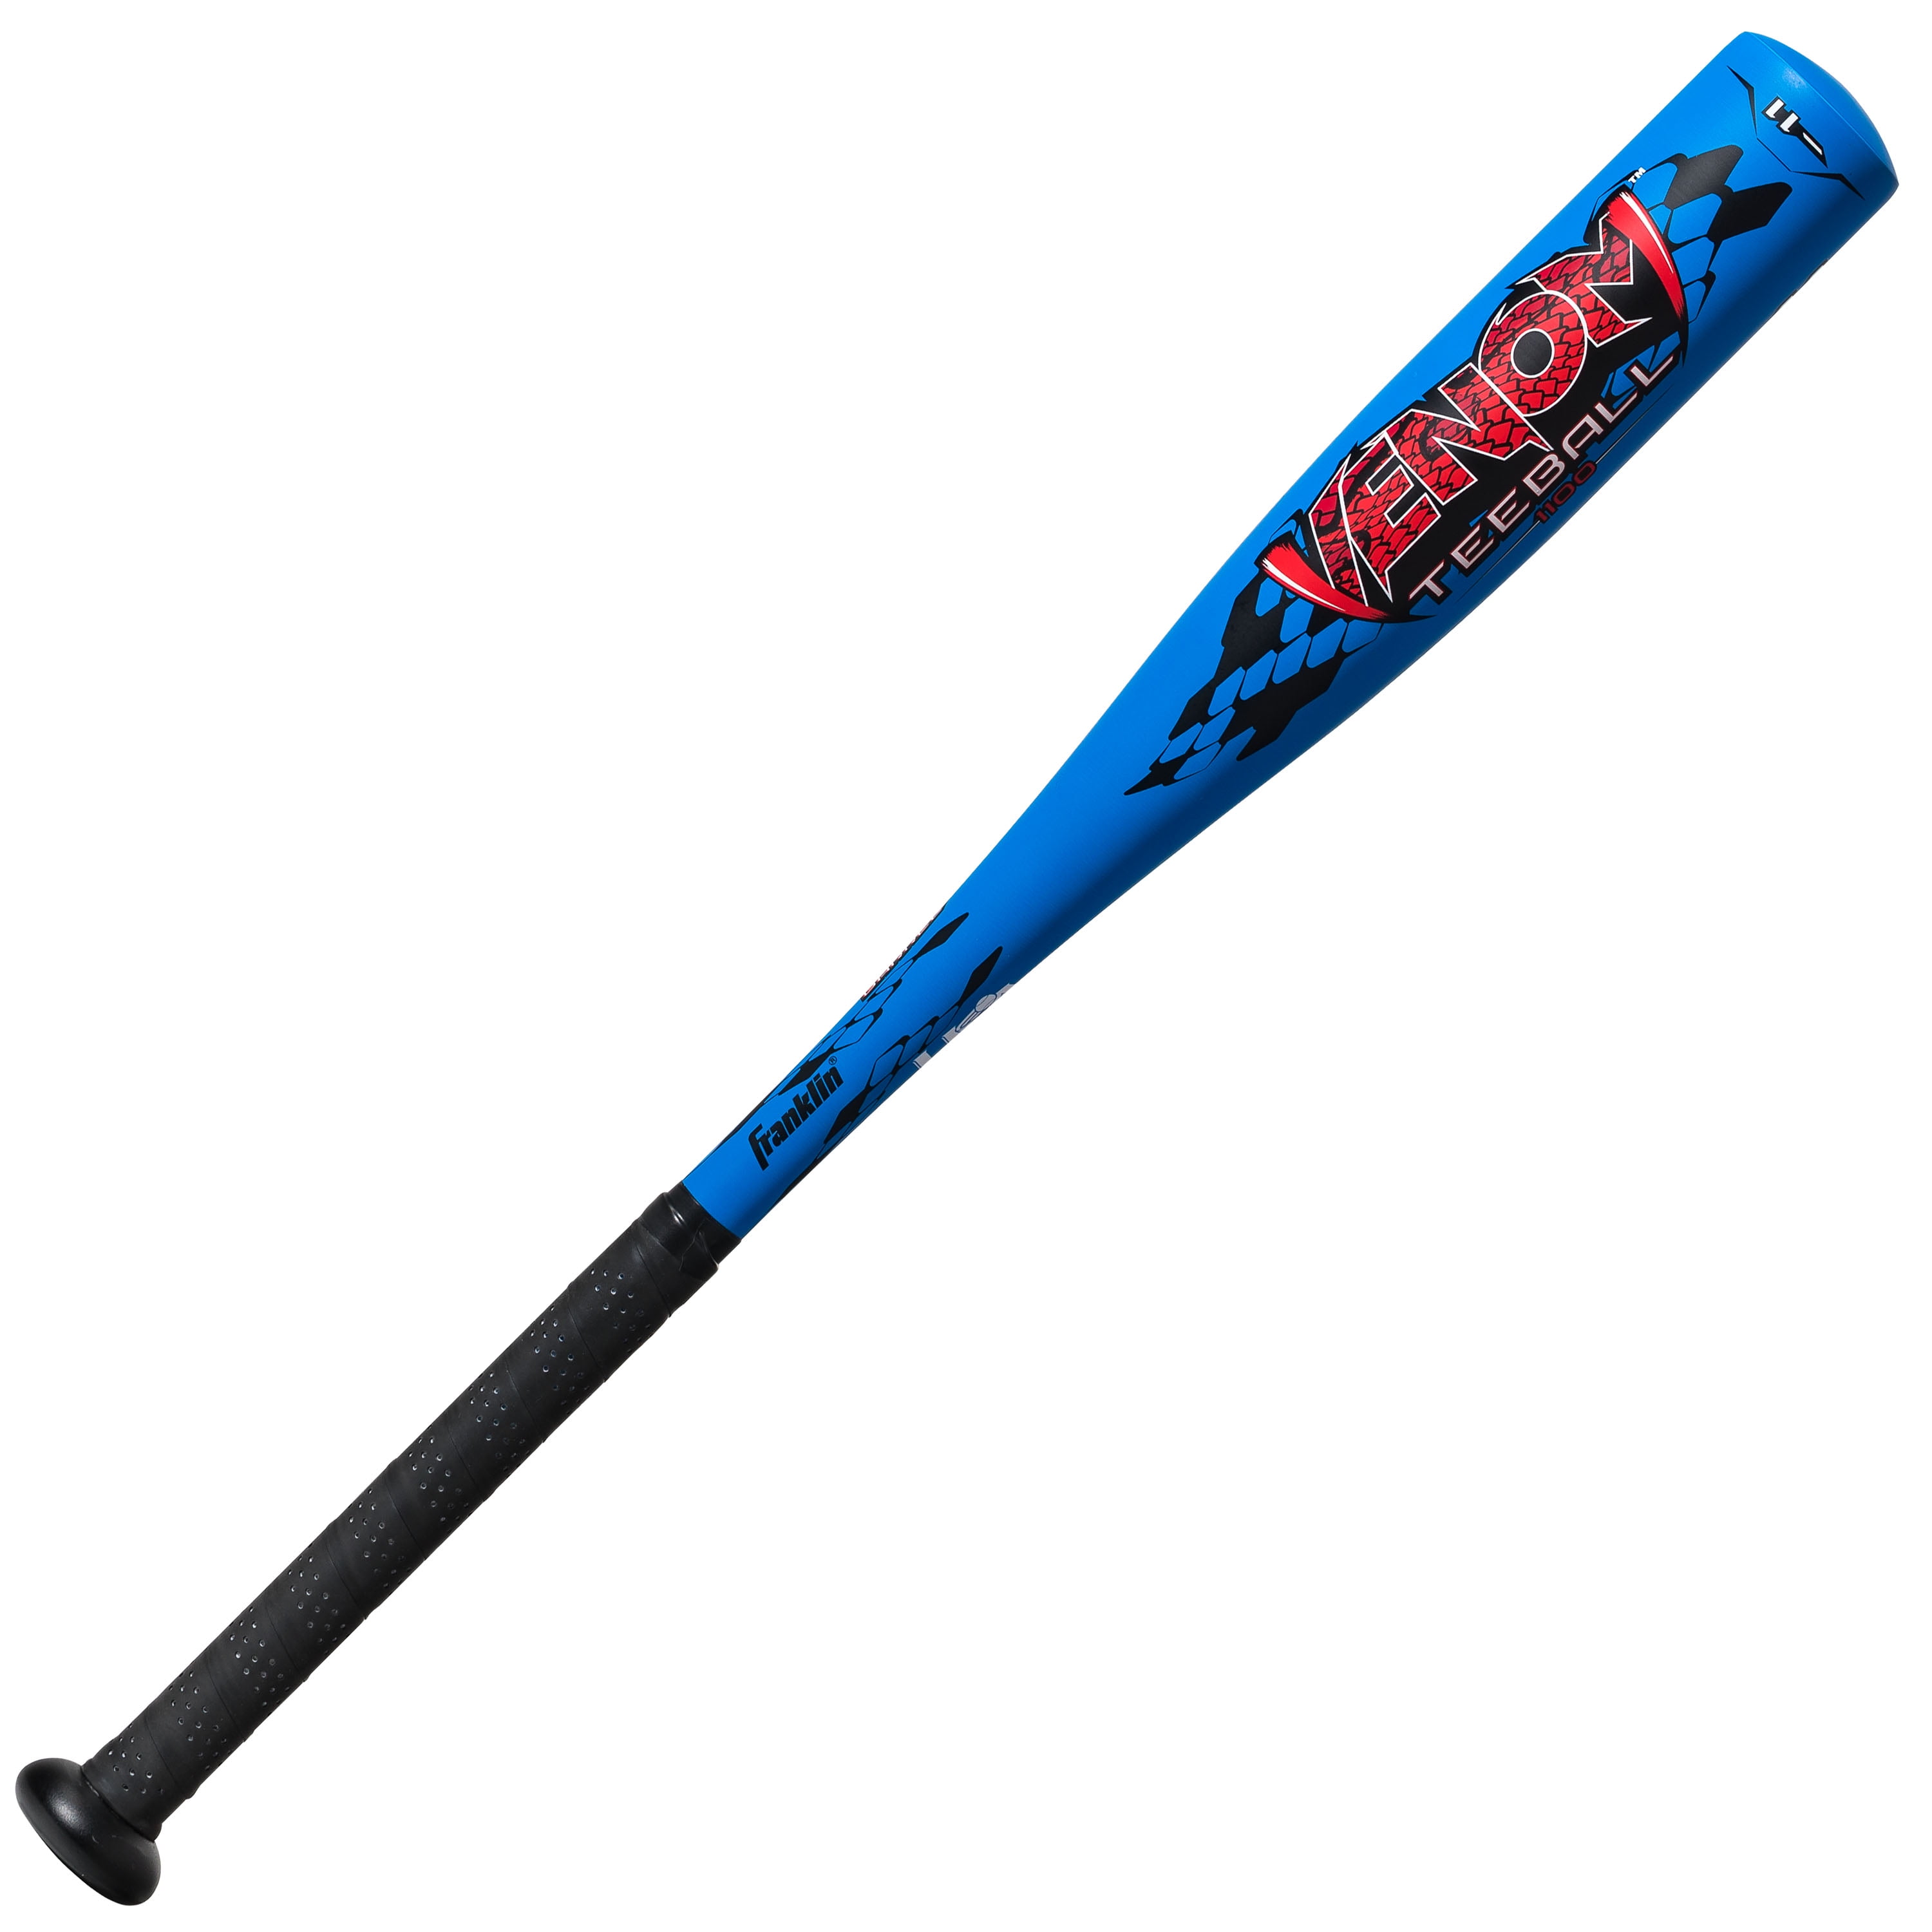 NEW Rawlings Fuel USA Youth Baseball Bat -8 27” 19oz 2 5/8” Allow Lightweight 